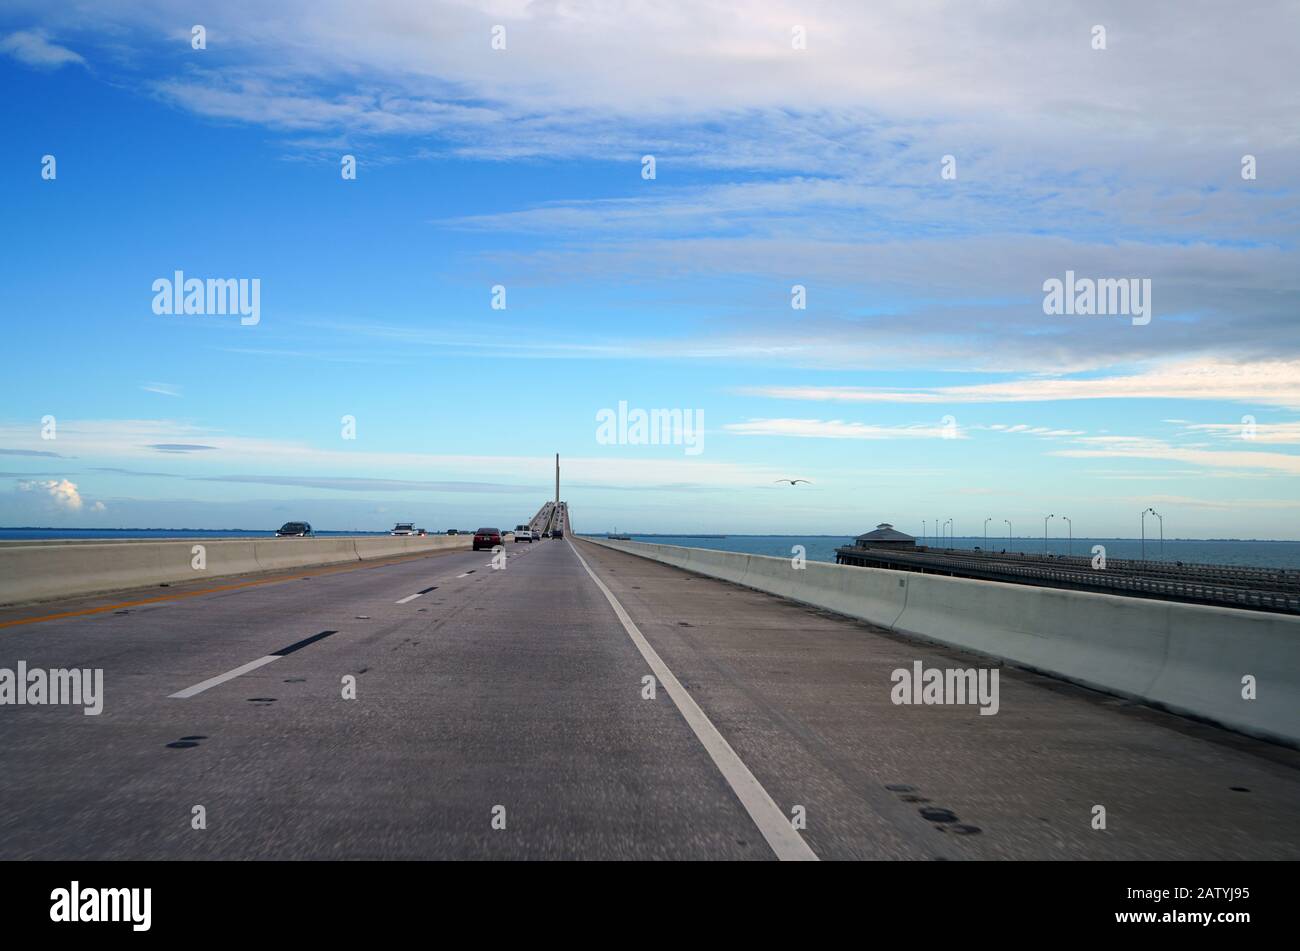 ST PETERSBURG, FL -24 JAN 2020- View of the Bob Graham Sunshine Skyway Bridge over the Tampa Bay in Saint Petersburg, Florida, United States. Stock Photo